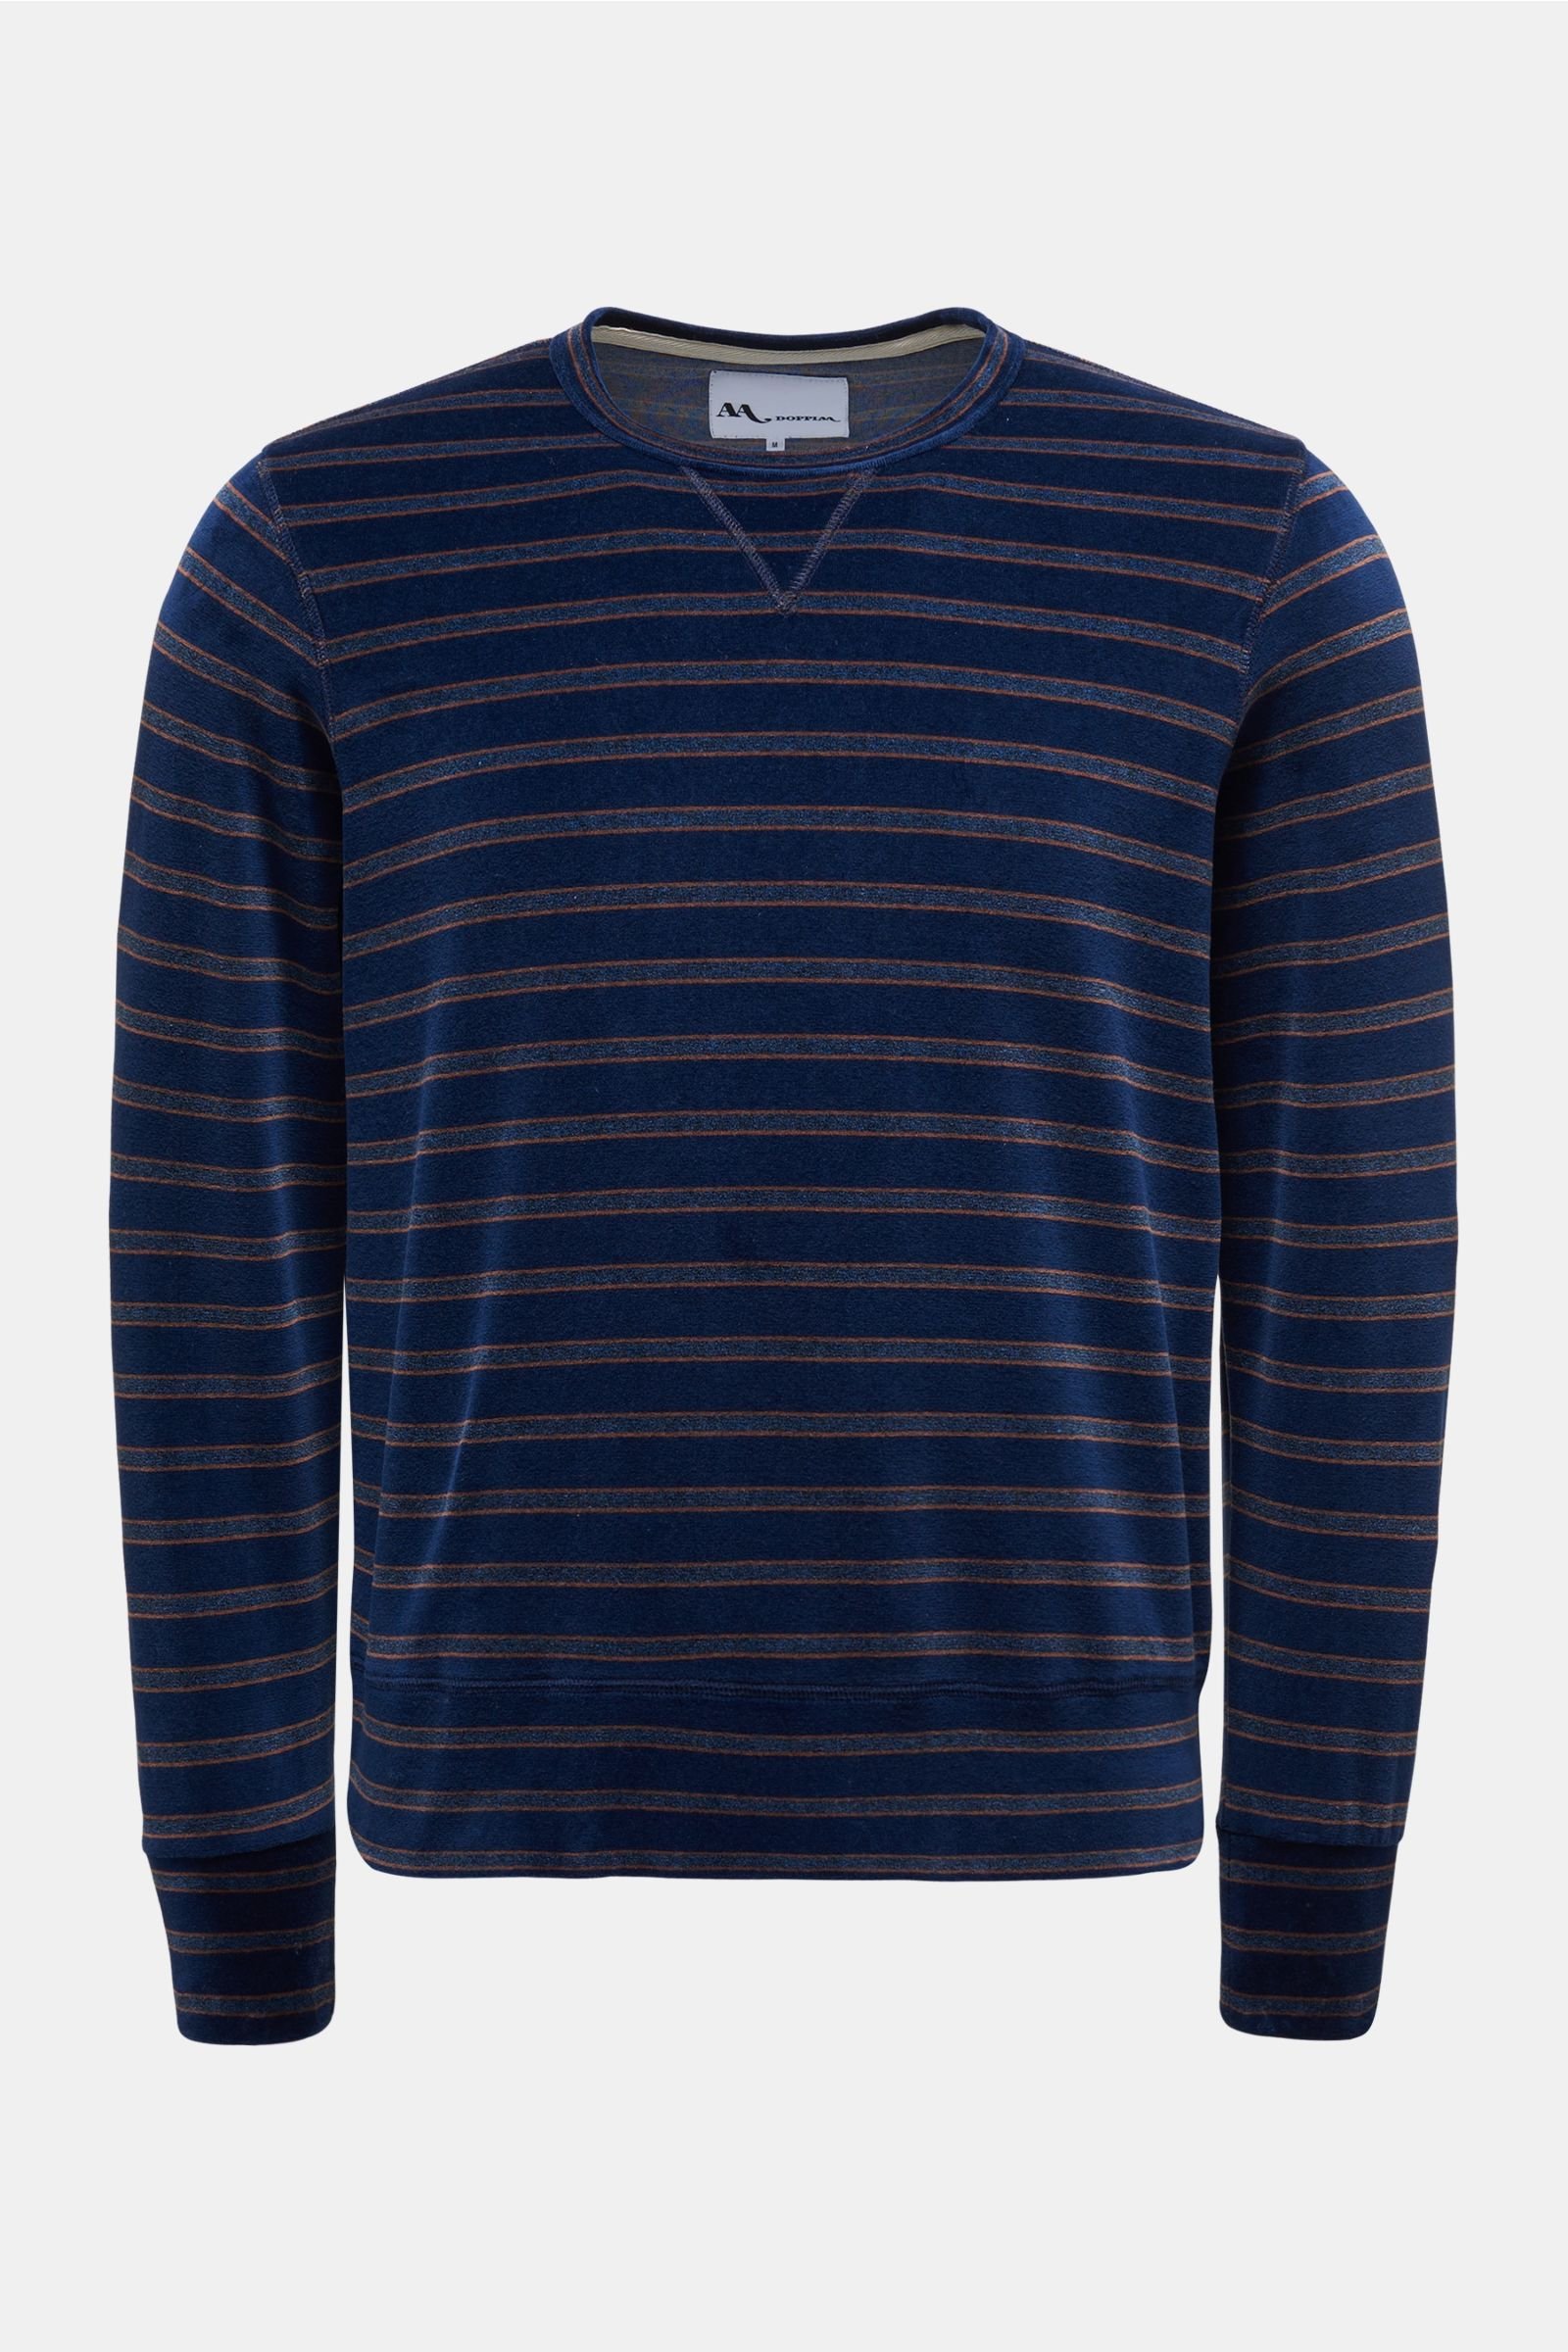 Plush fabric crew neck sweatshirt 'Aamerican' navy/brown striped